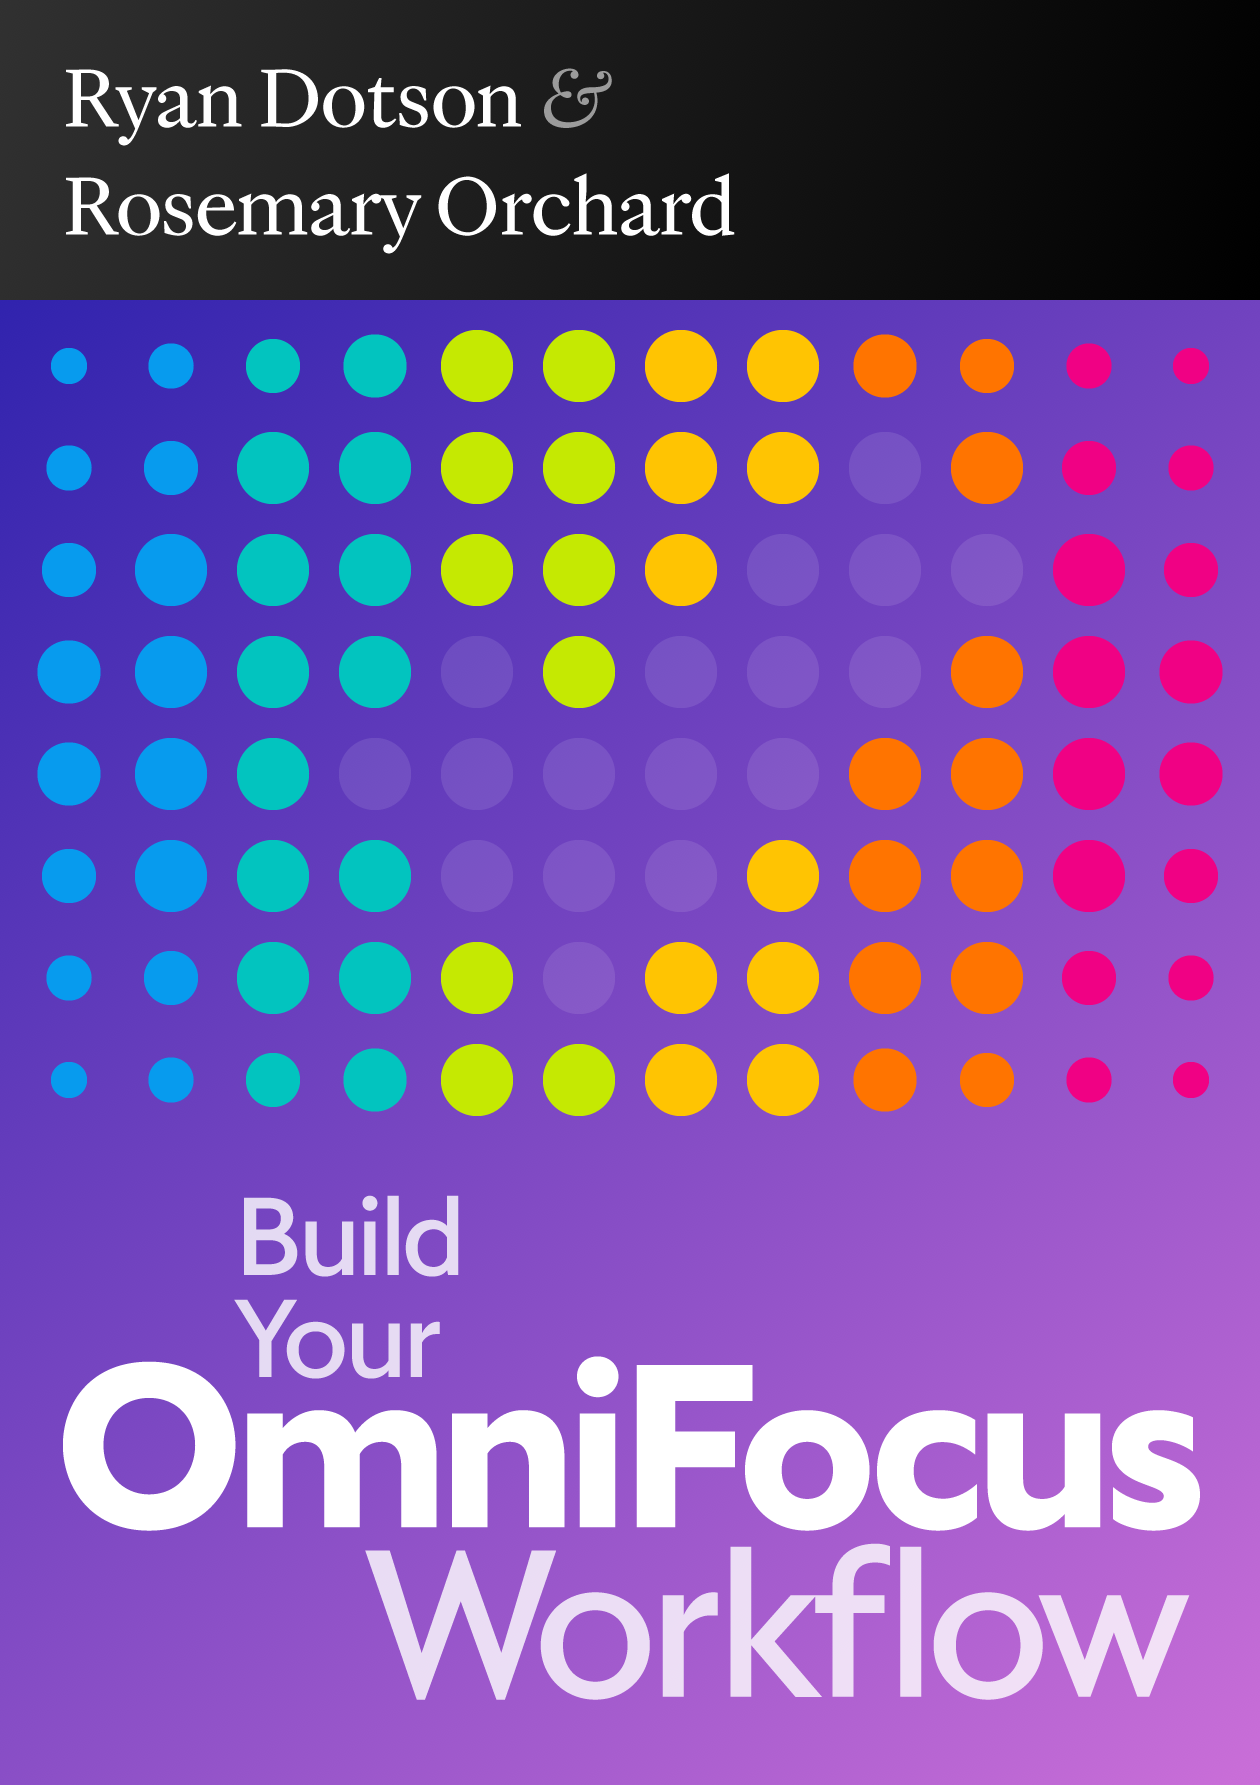 Build Your OmniFocus Workflow Book Artwork